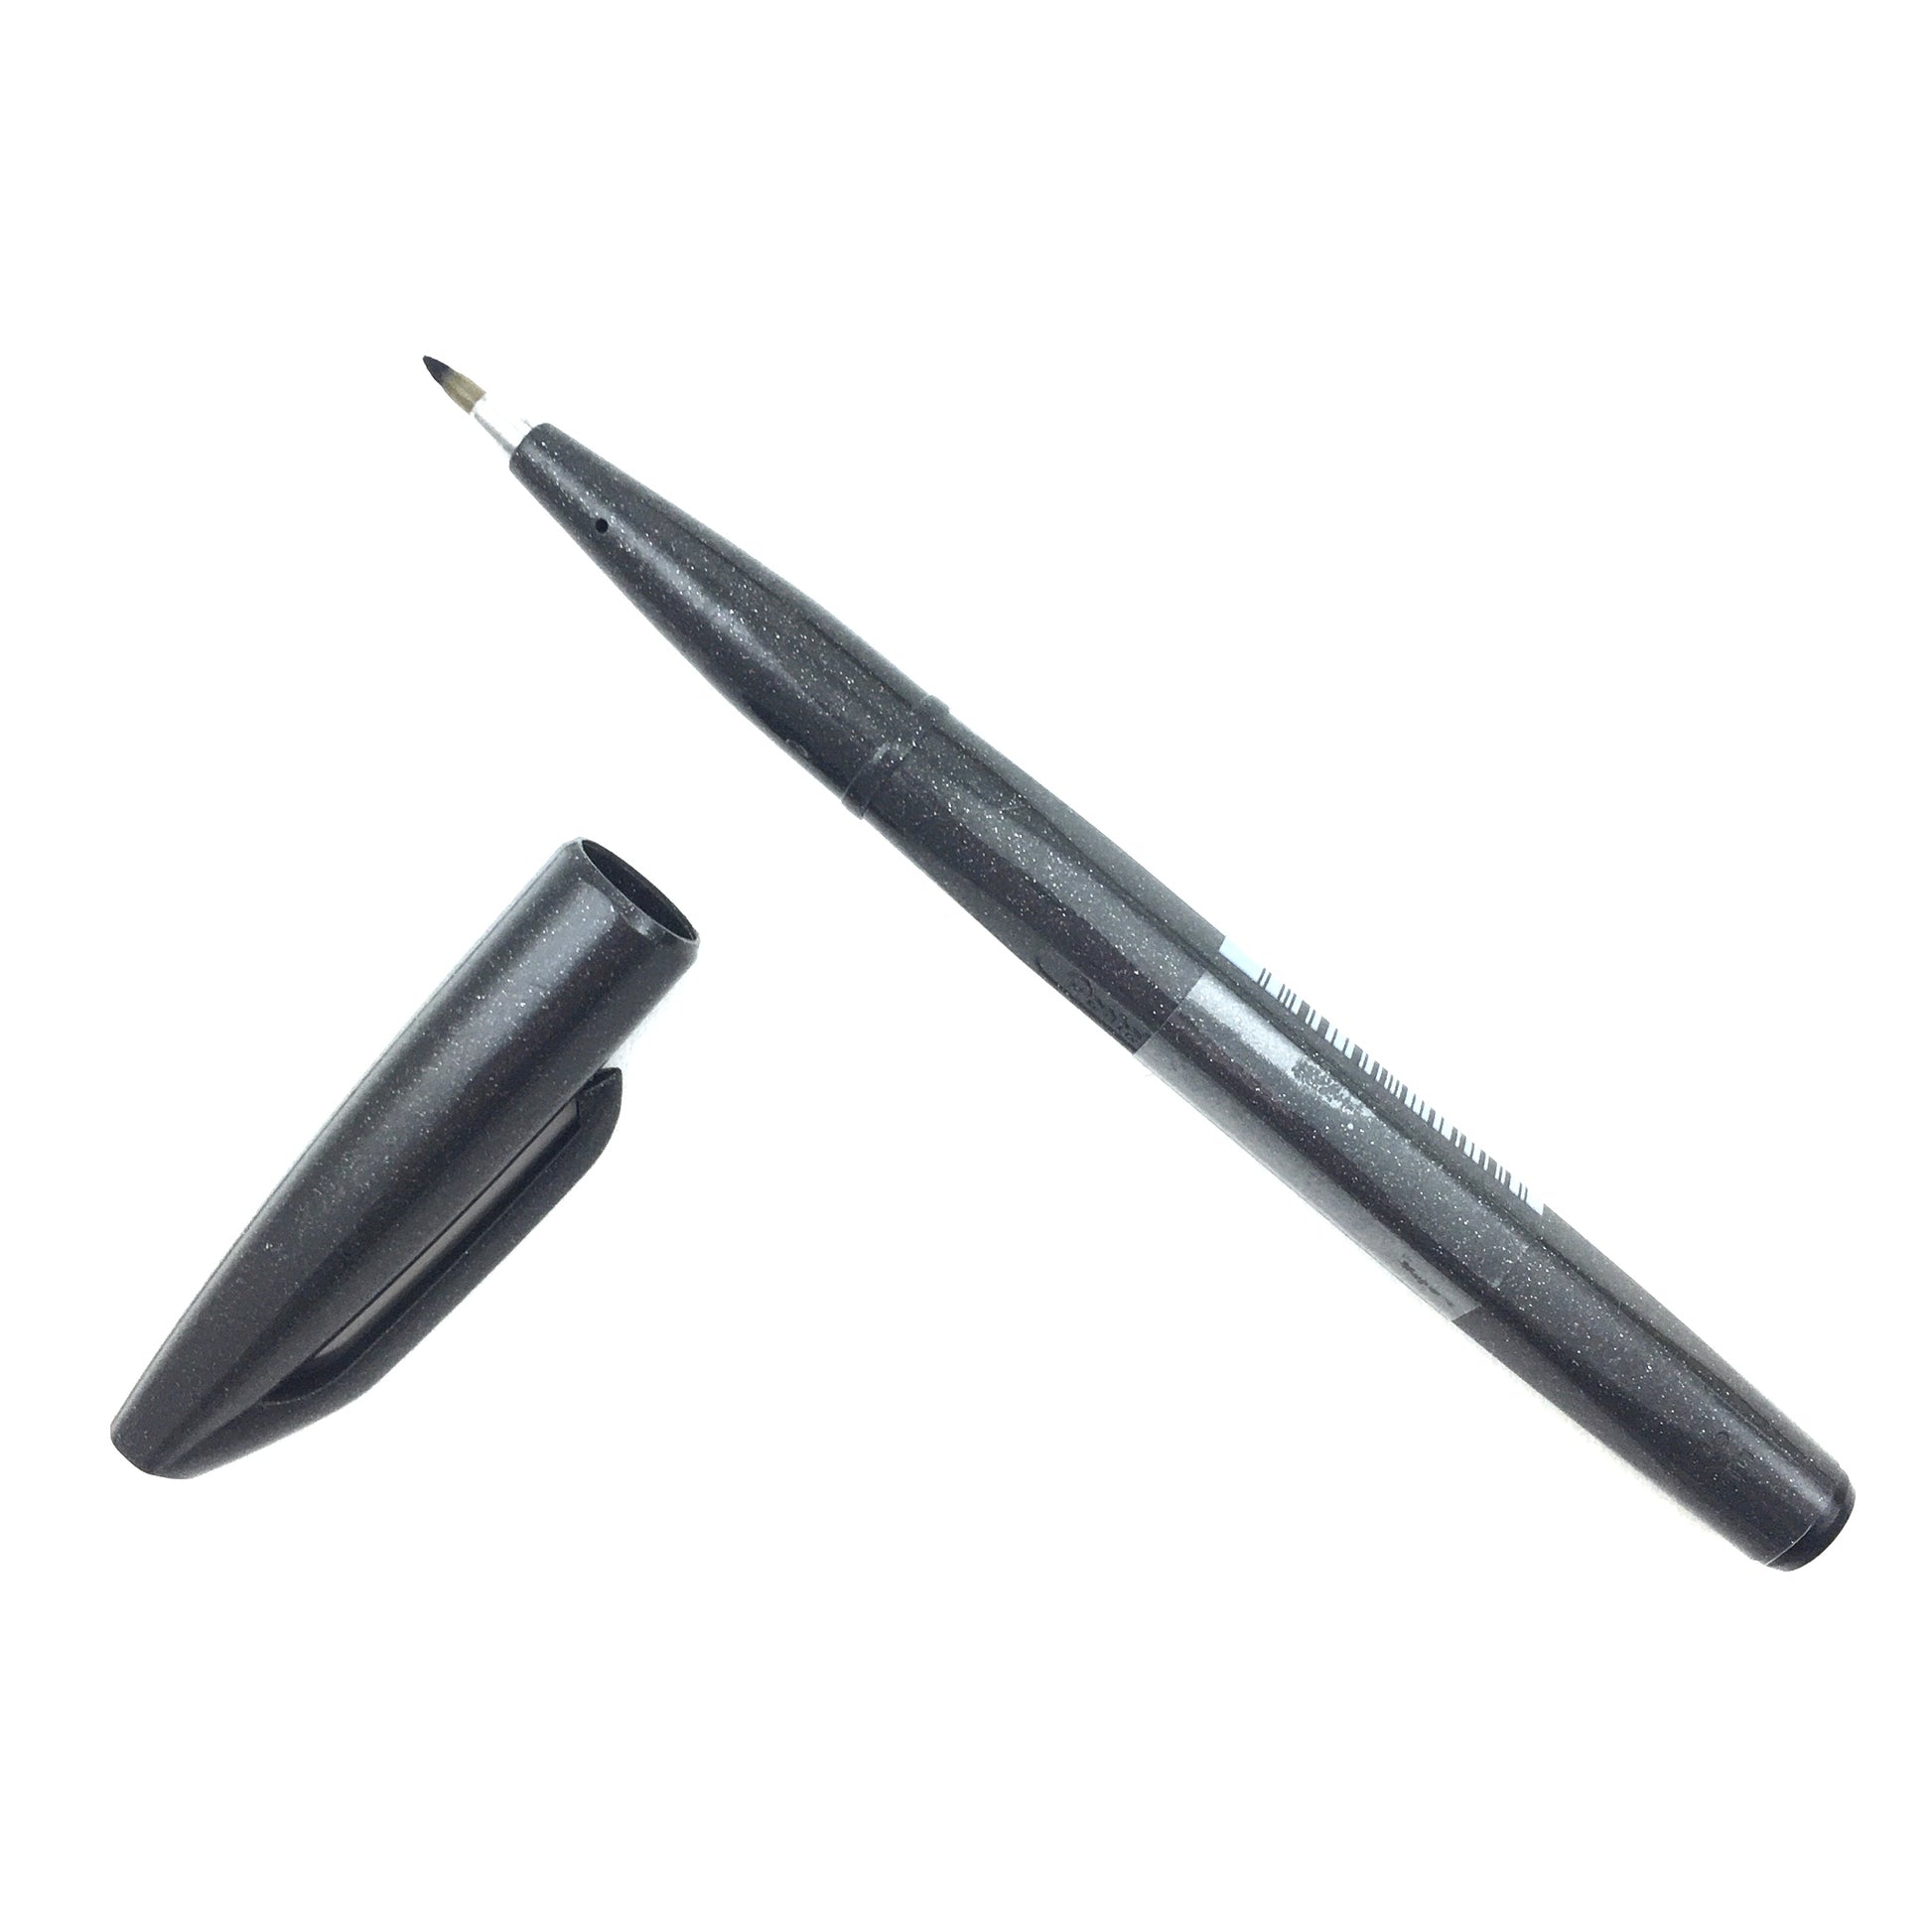 Pentel Arts Sign Pen Micro Brush Set